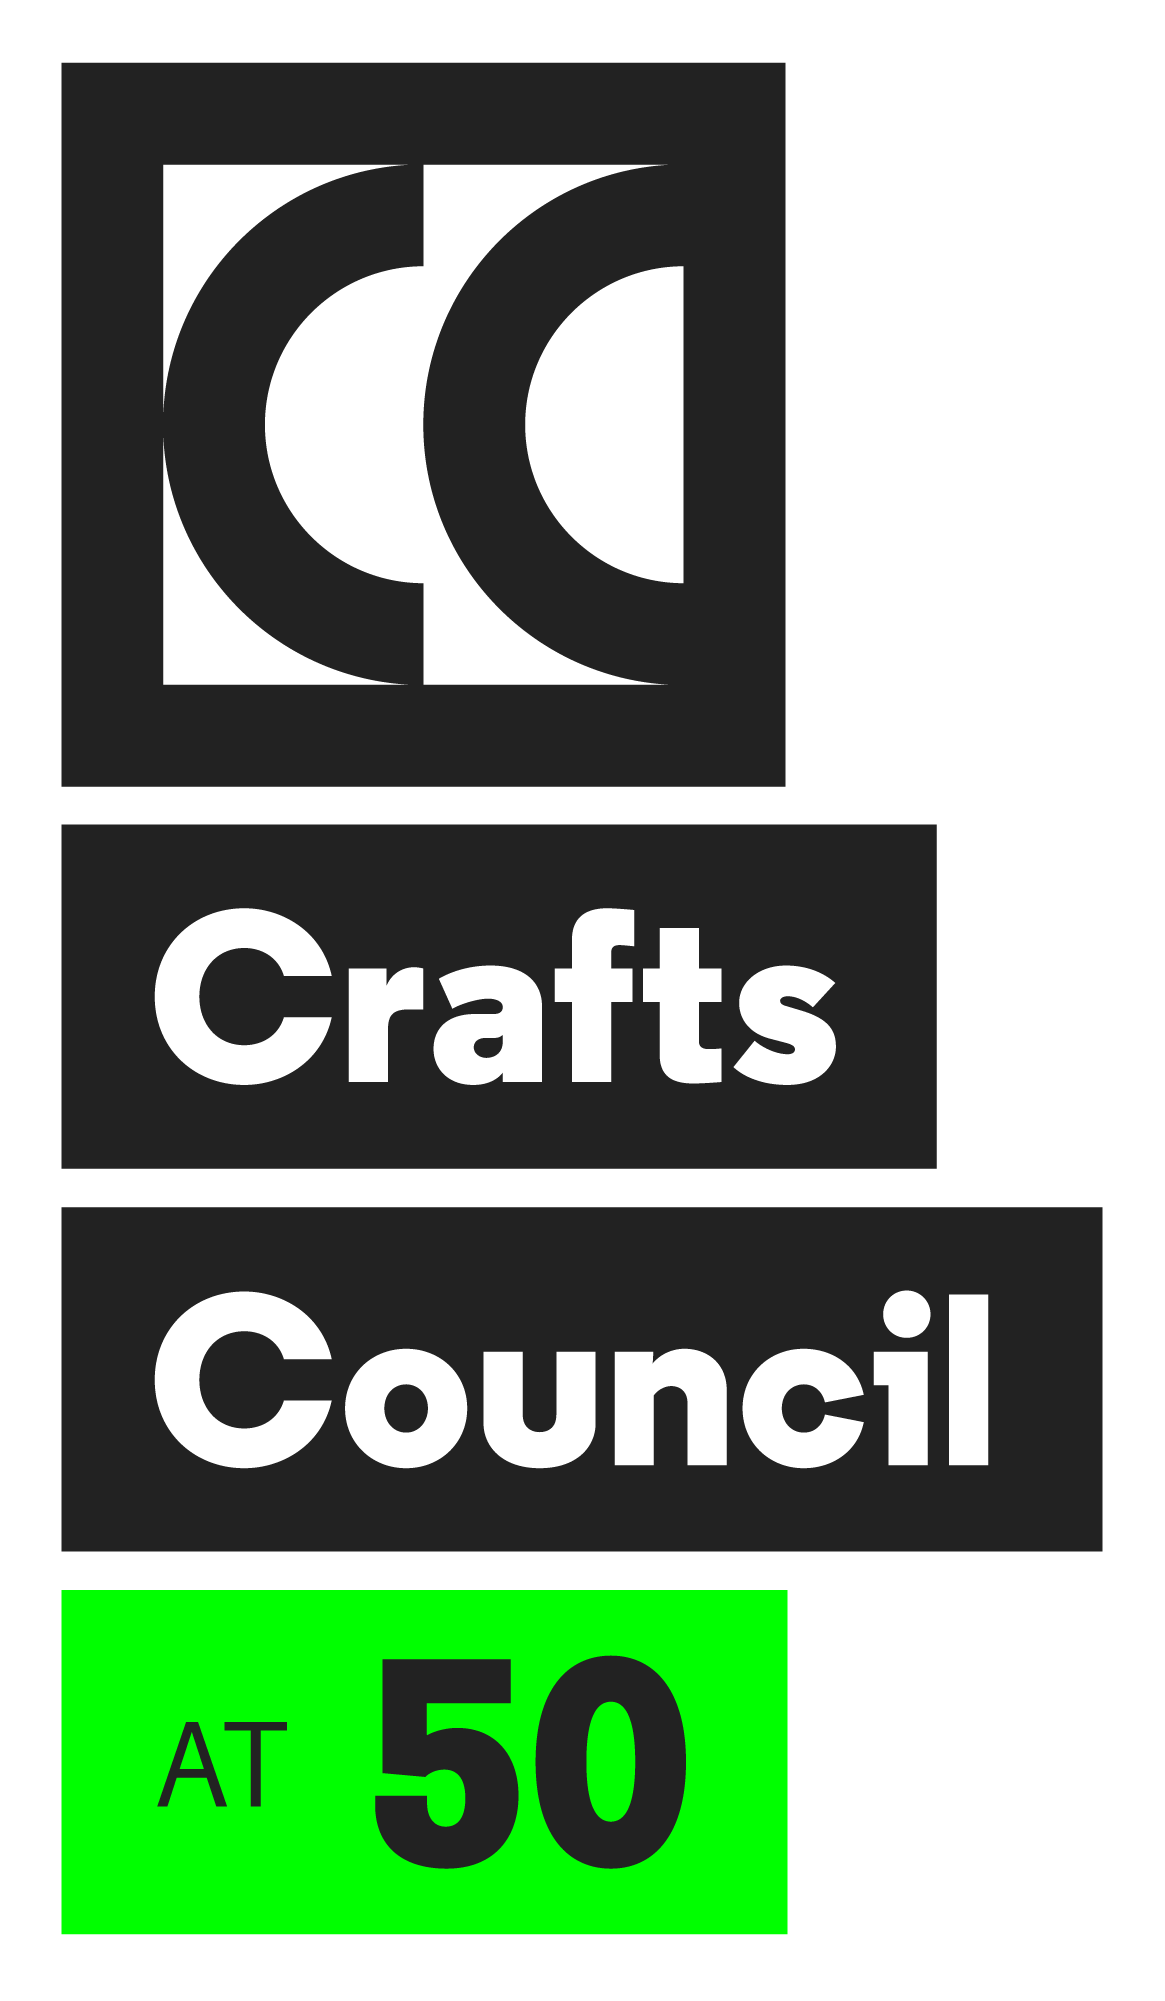 Crafts Council at 50 logo